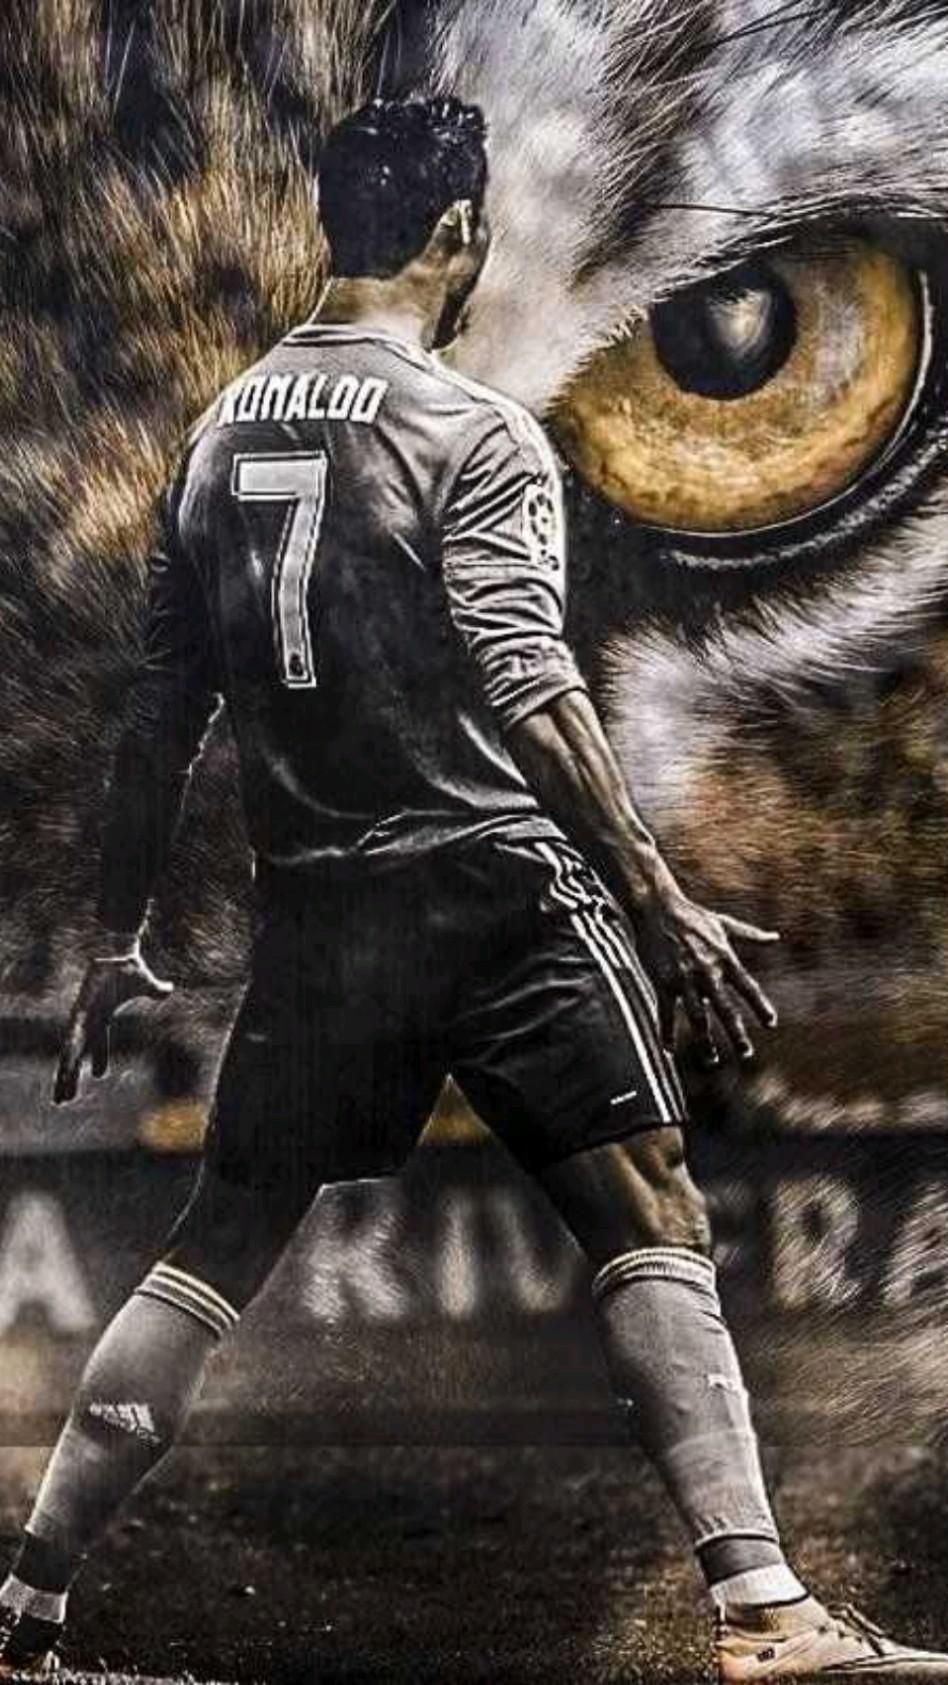 Cristiano ronaldo wallpaper, Ronaldo